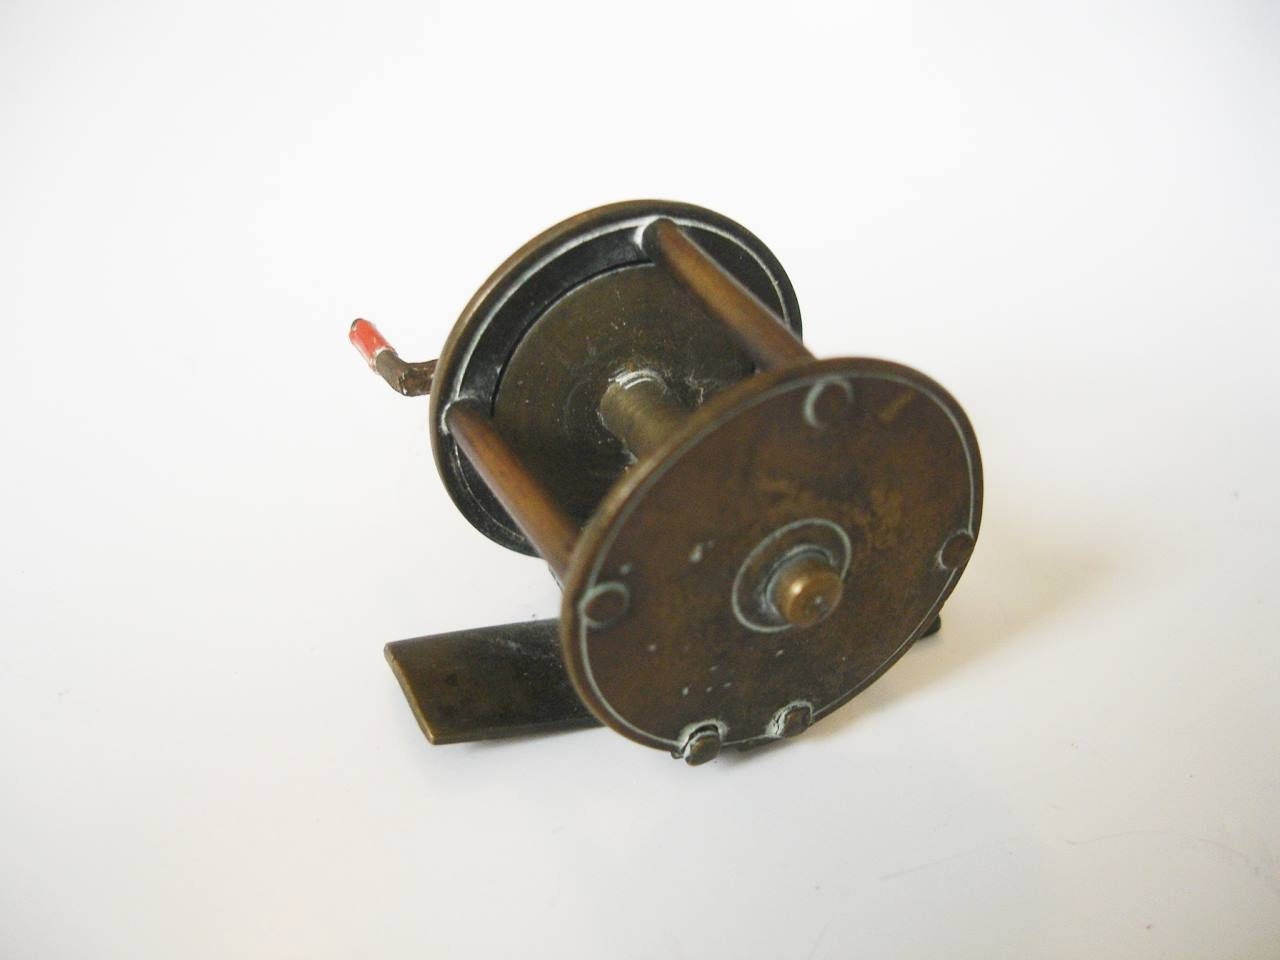 Antique brass salmon crank wind reel c 1870, 3.75 on off ratchet